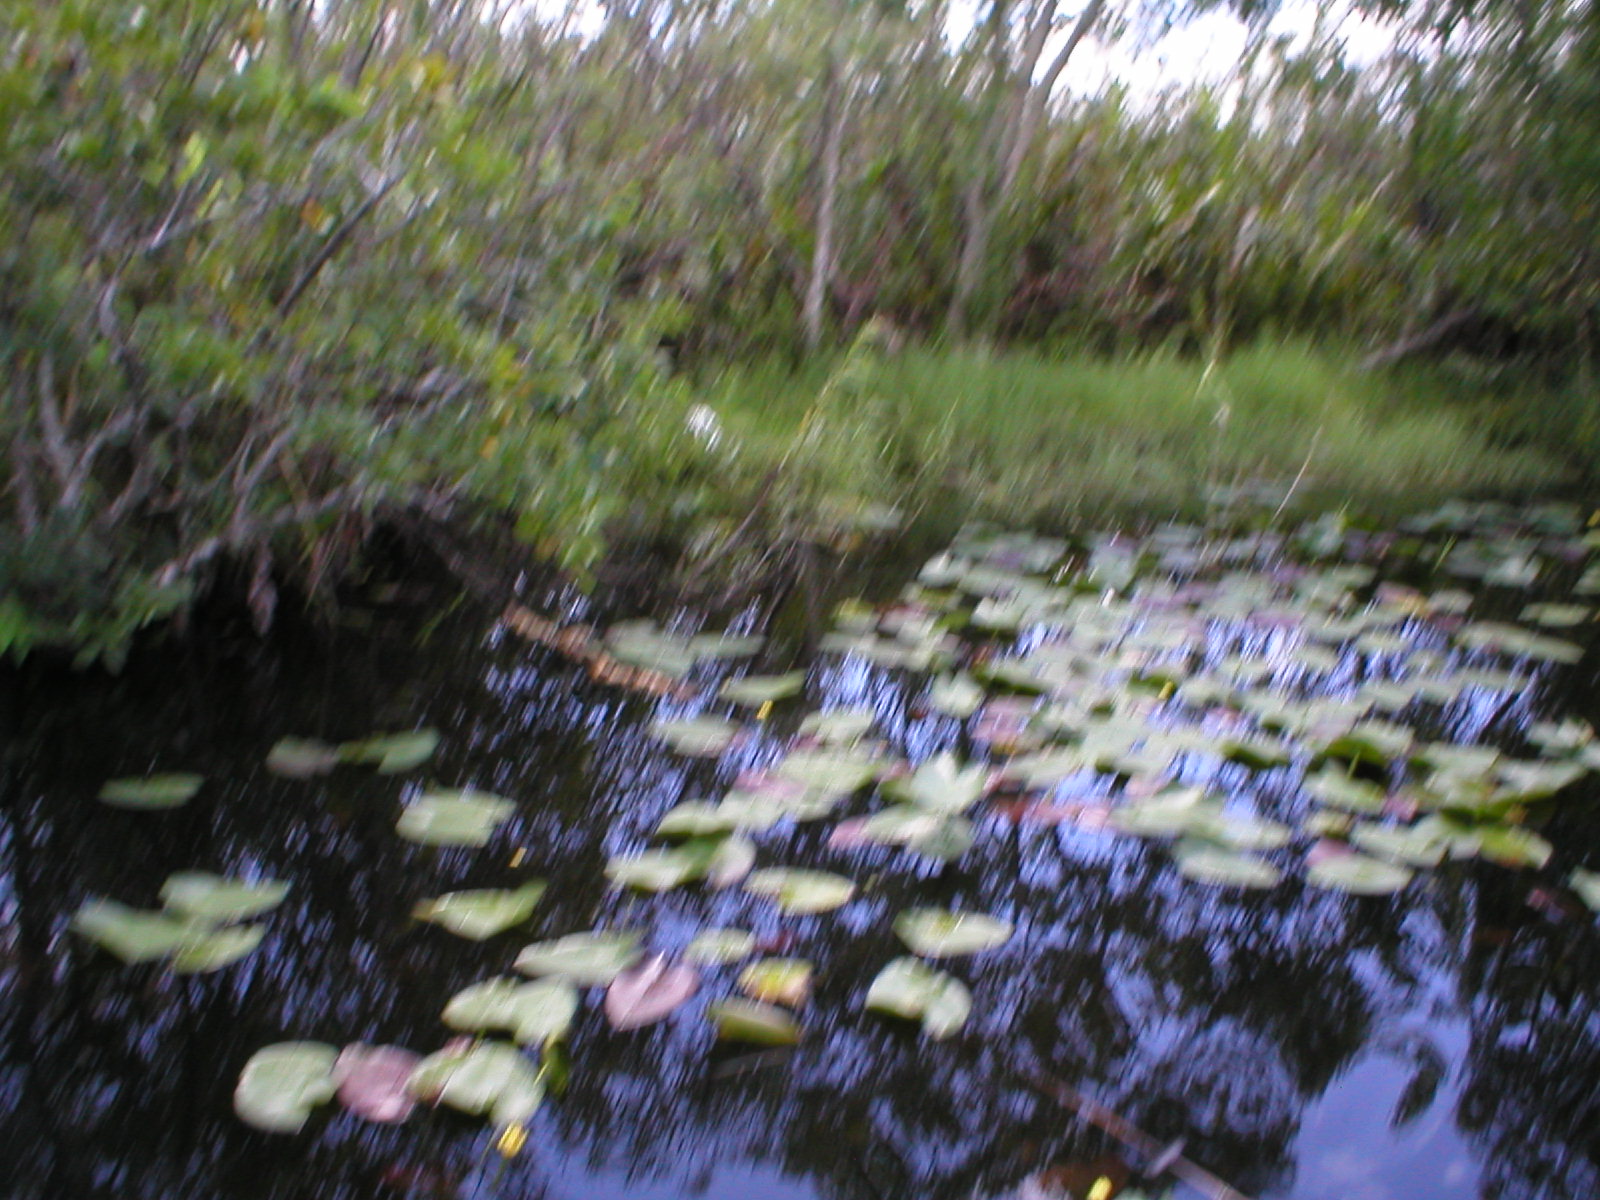 Everglades 